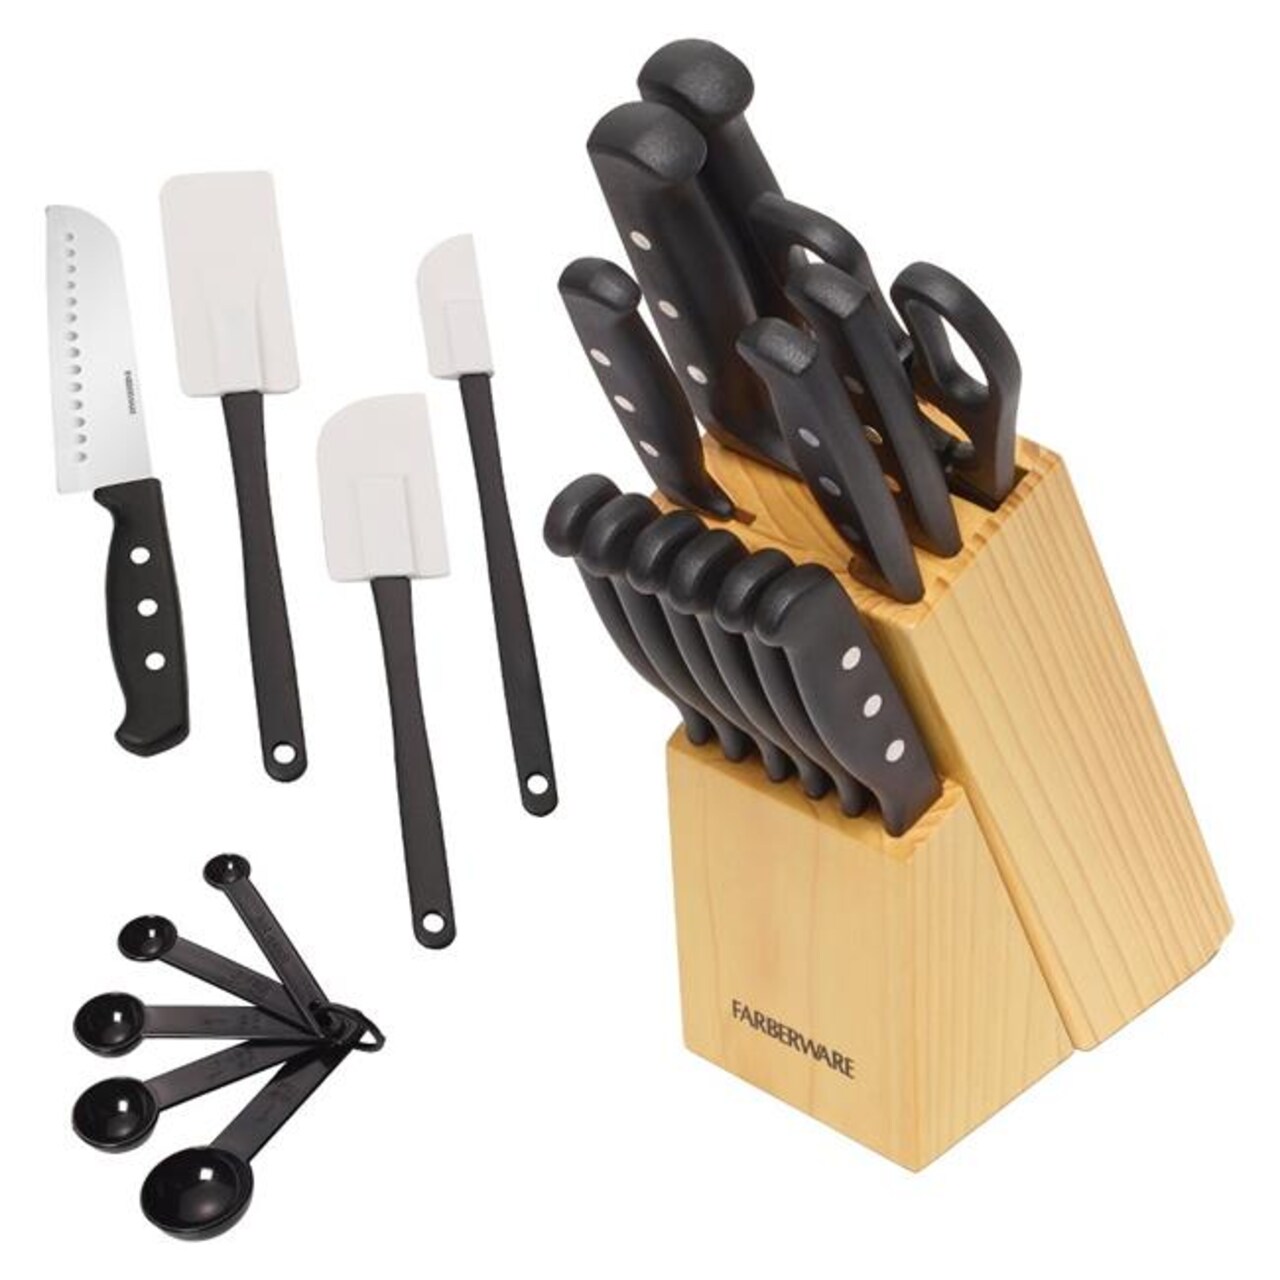 Lifetime Brands 261932 22 Piece Farberware Stainless Steel Cutlery